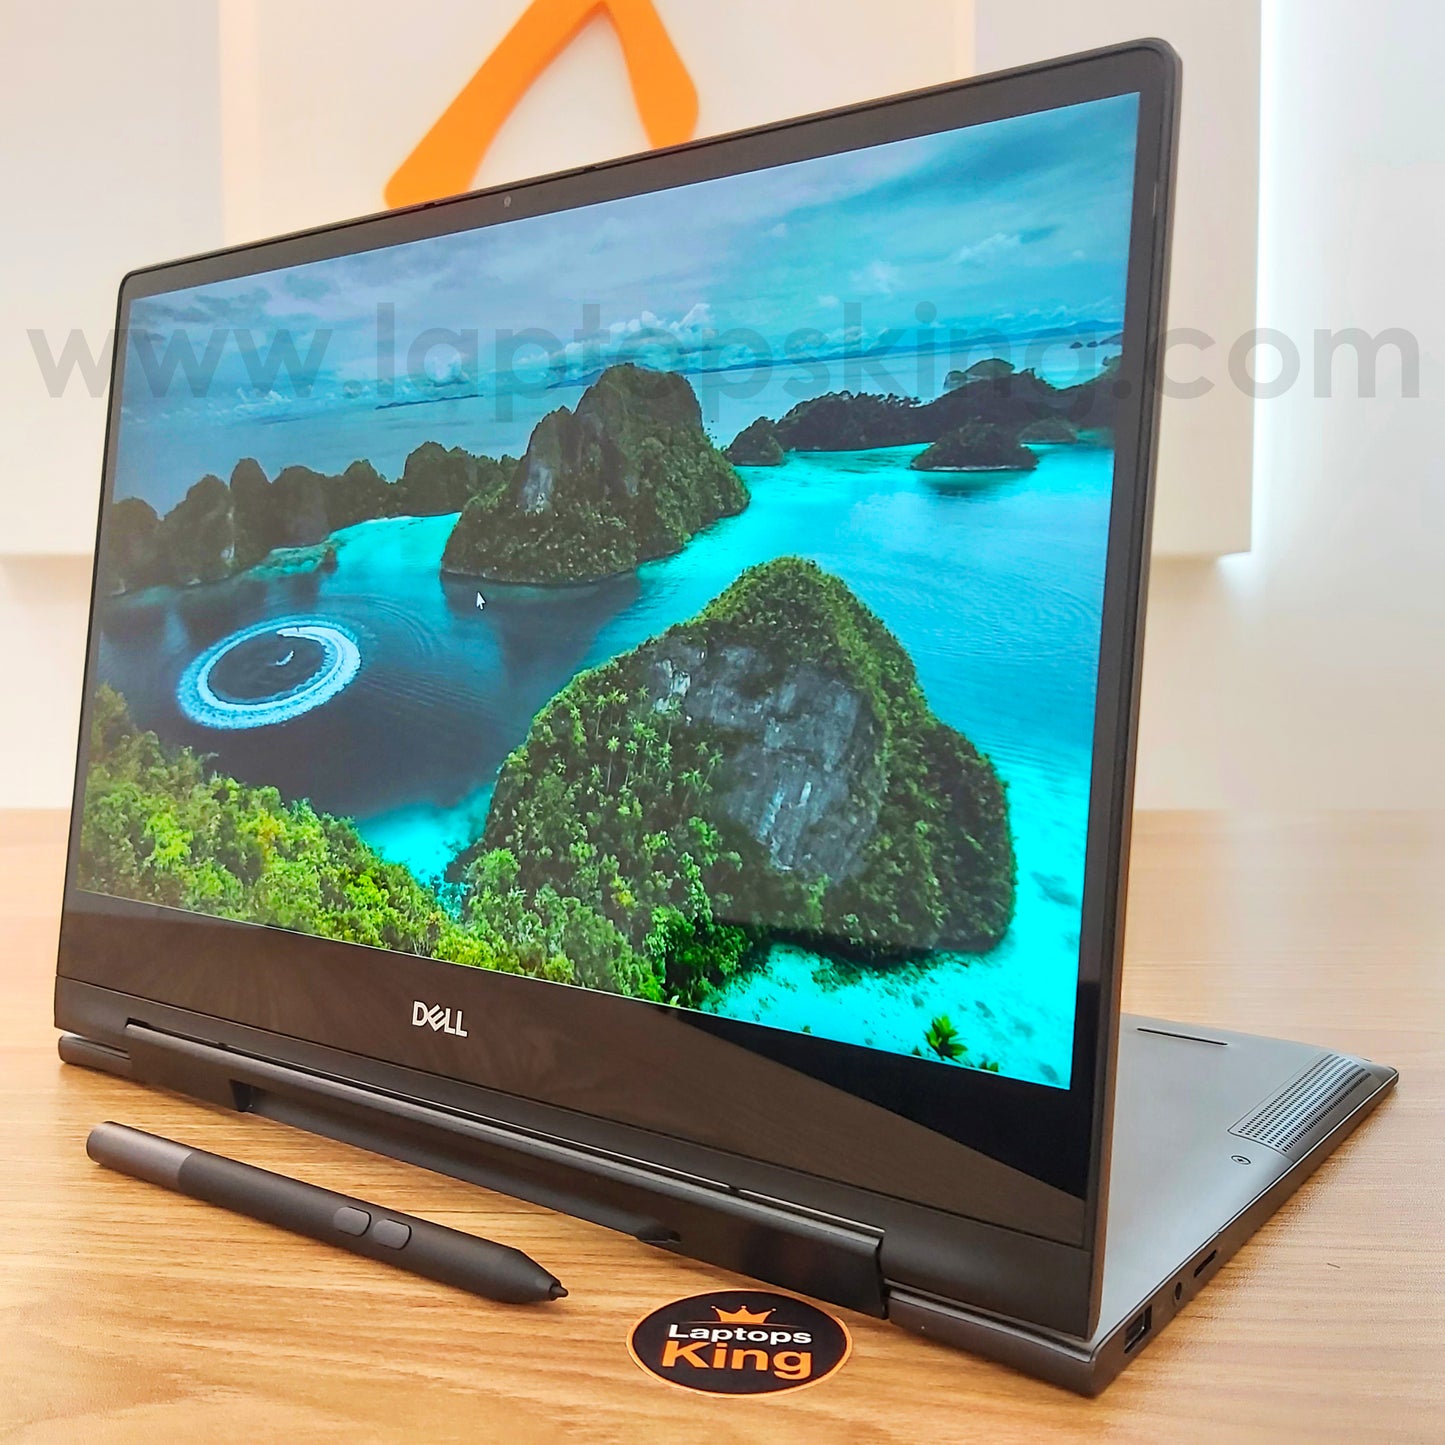 Dell Inspiron 7390 i7-8565U 4K Flip-Touchscreen 2in1 Laptop (Open Box)